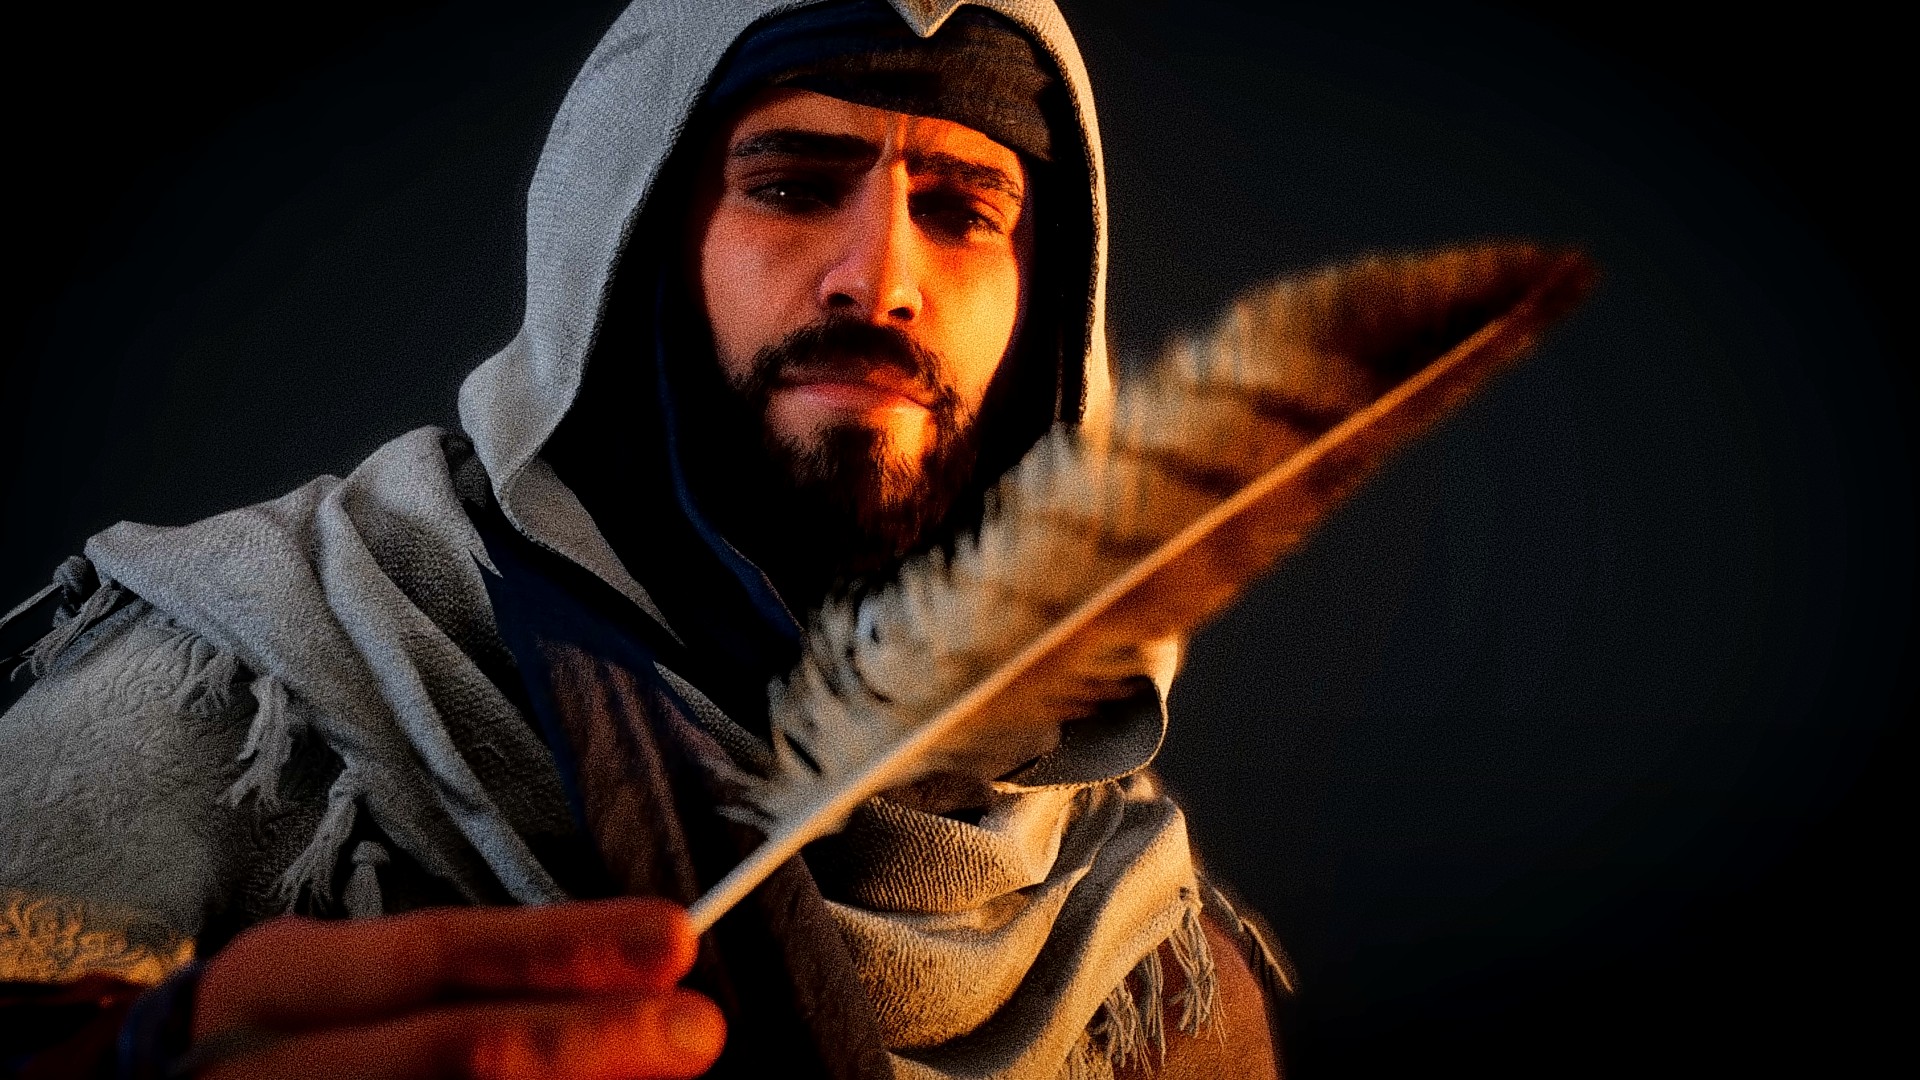 Assassin's Creed Valhalla DLC plans 